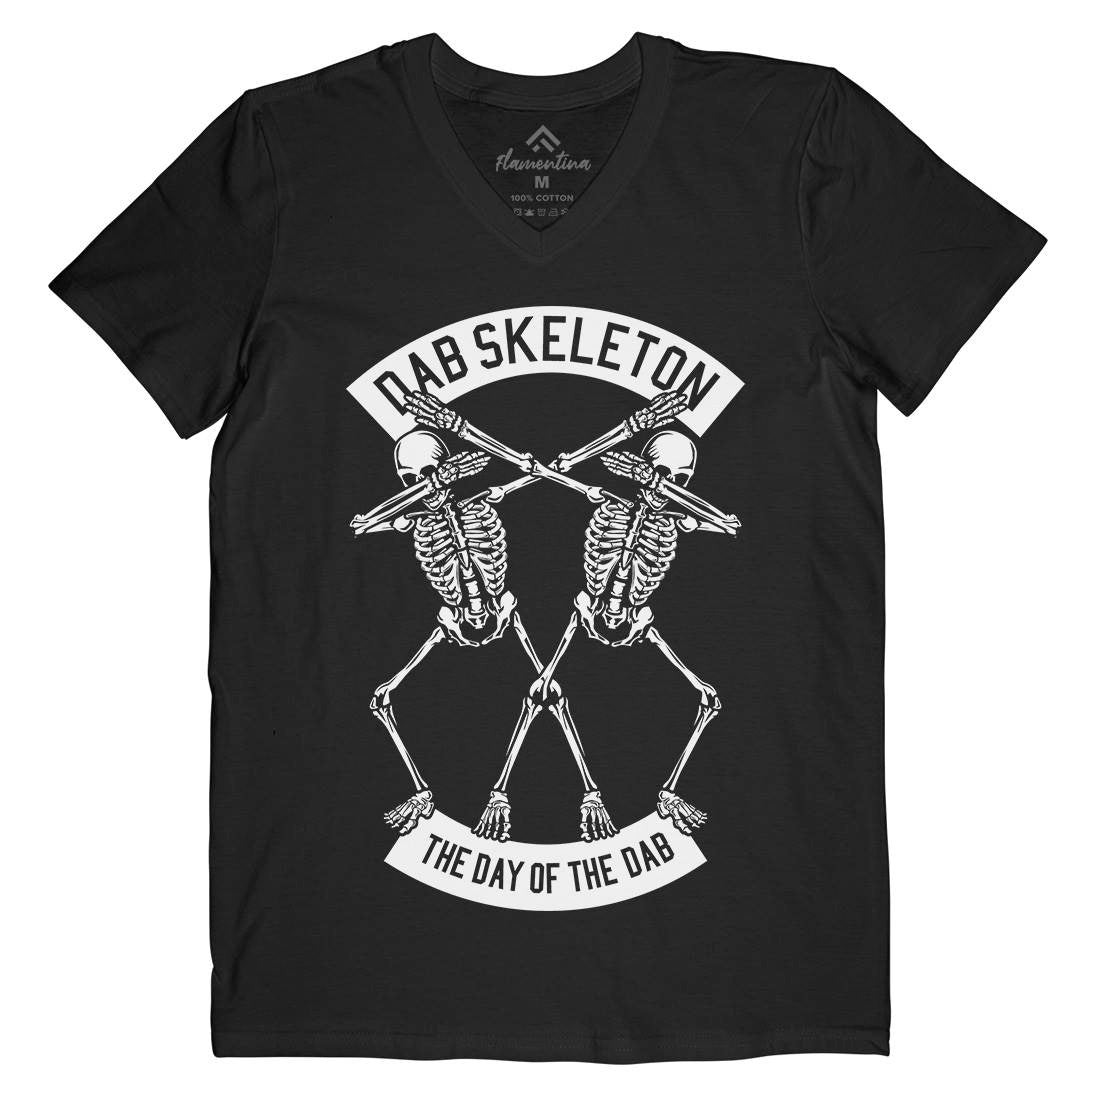 Dab Skeleton Mens V-Neck T-Shirt Music B524